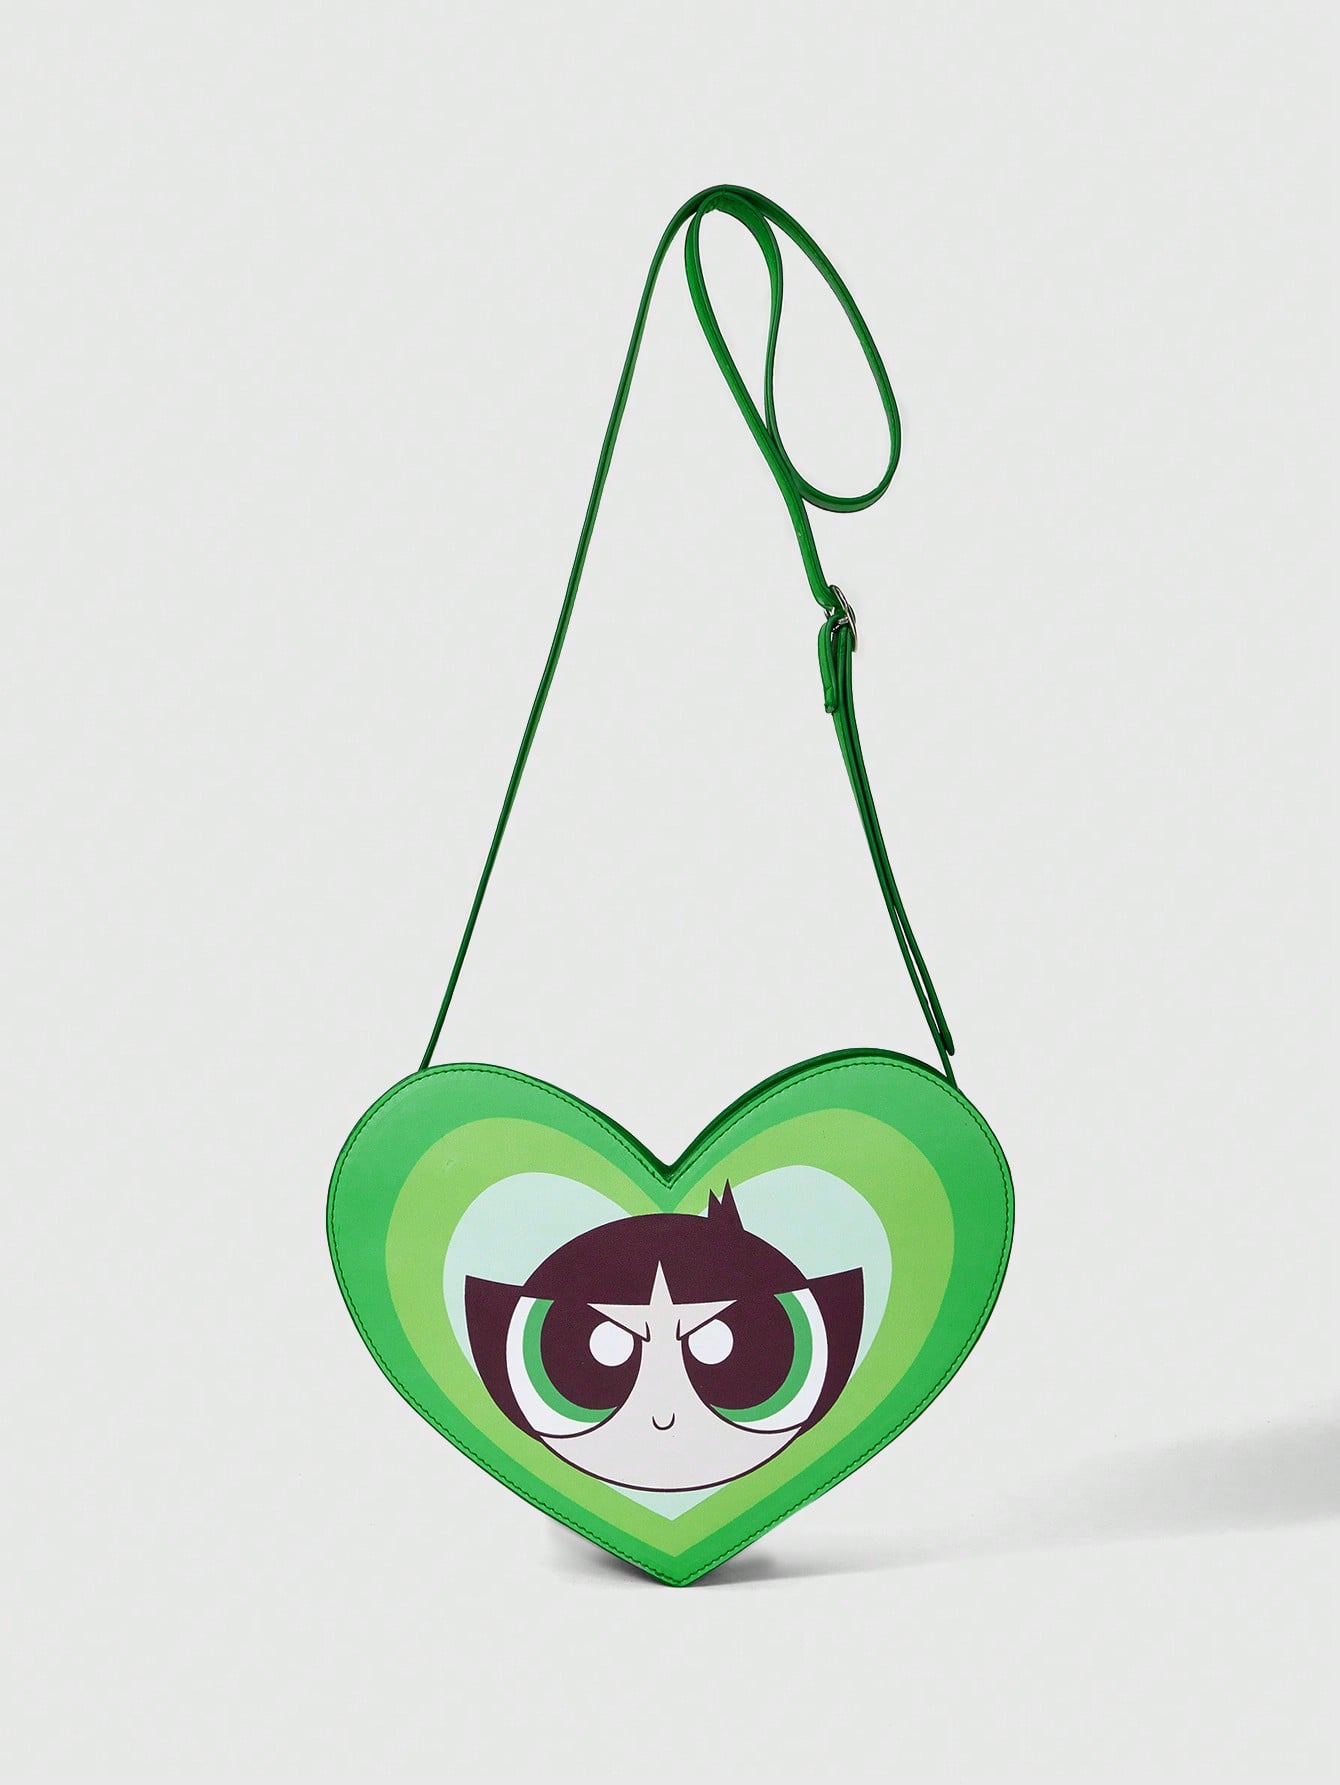 Крутые девчонки | Новинка ROMWE с мультяшным графическим дизайном в виде сердца, зеленый japanese anime cool akatsuki hoodies women funny cartoon graphic hoodie cartoon harajuku unisex manga sweatshirts female